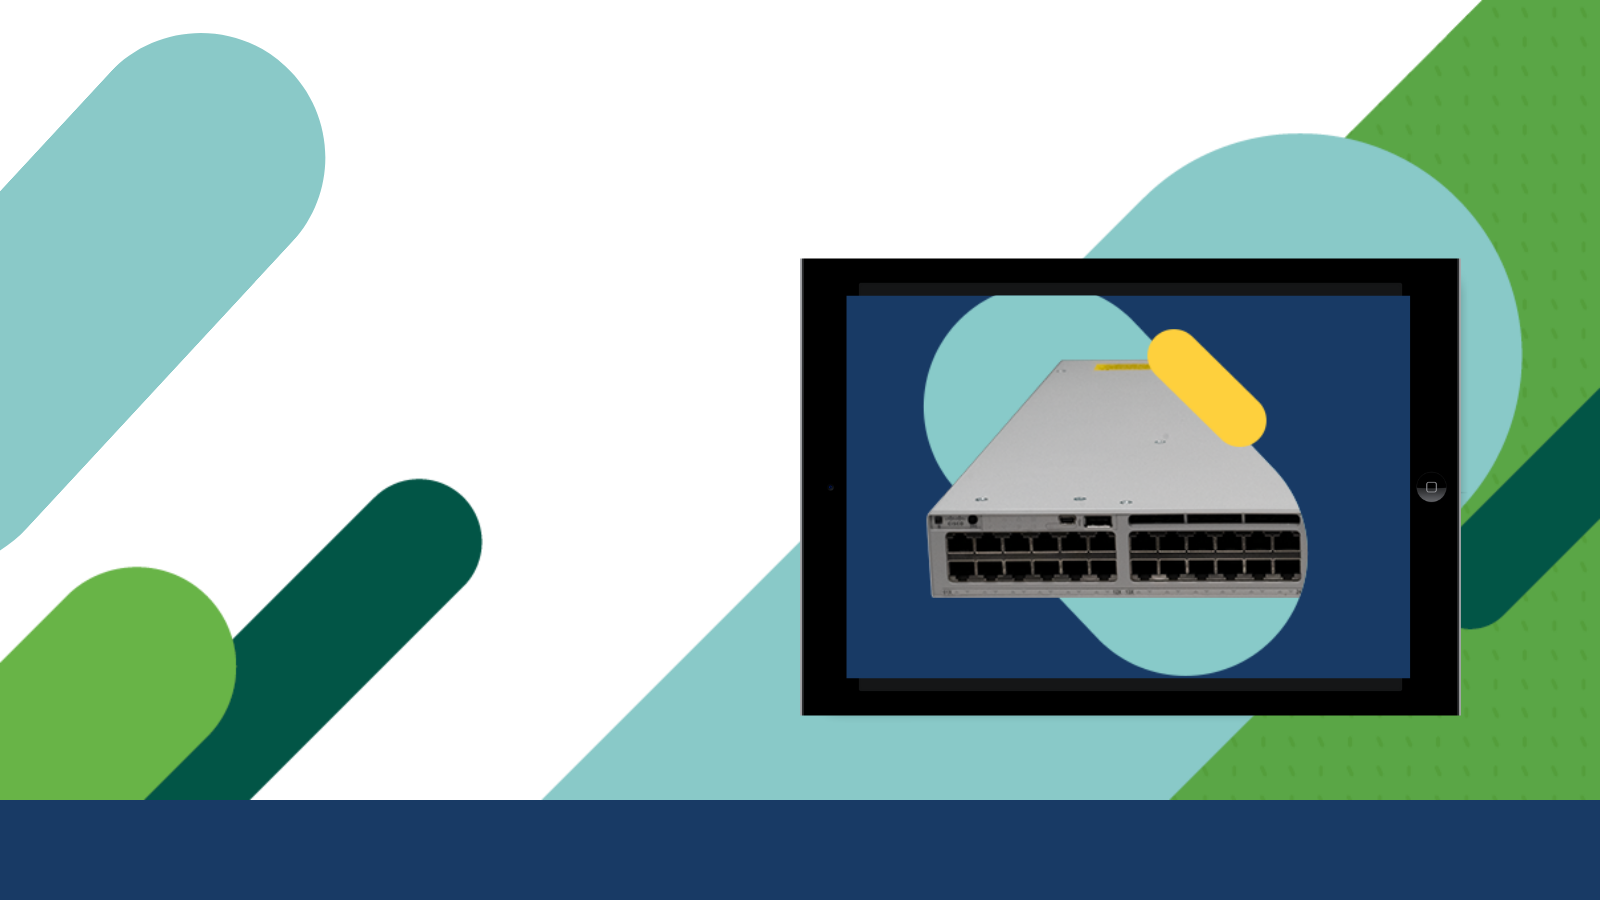 Cisco Catalyst & Meraki Dashboard Unite to Simplify Network Management